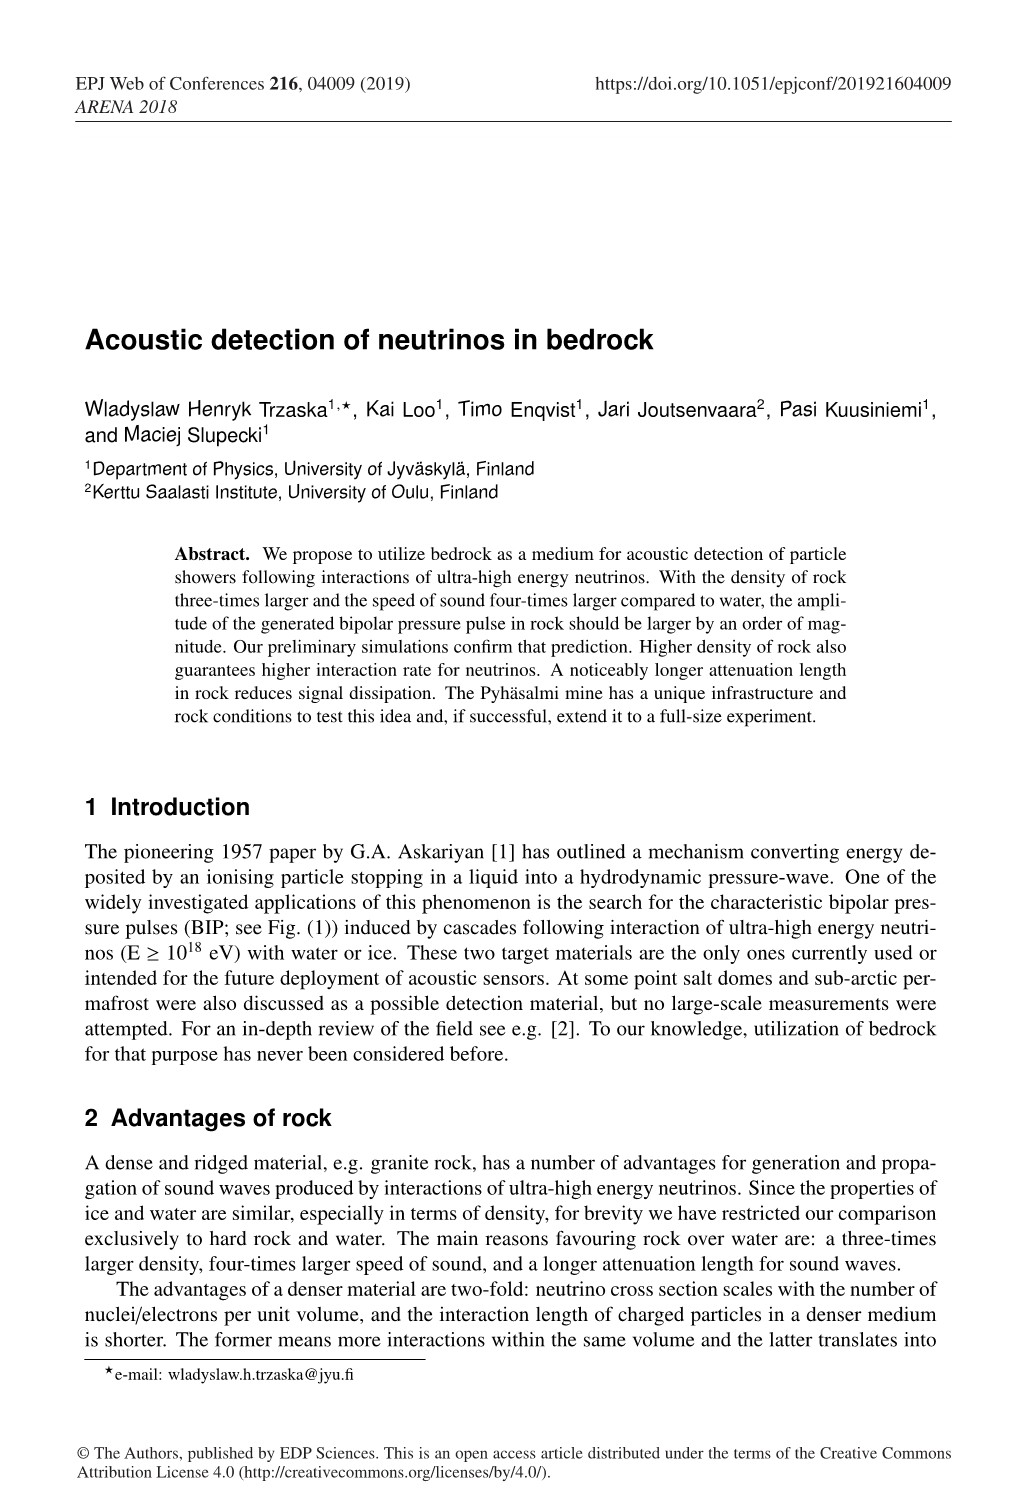 Acoustic Detection of Neutrinos in Bedrock